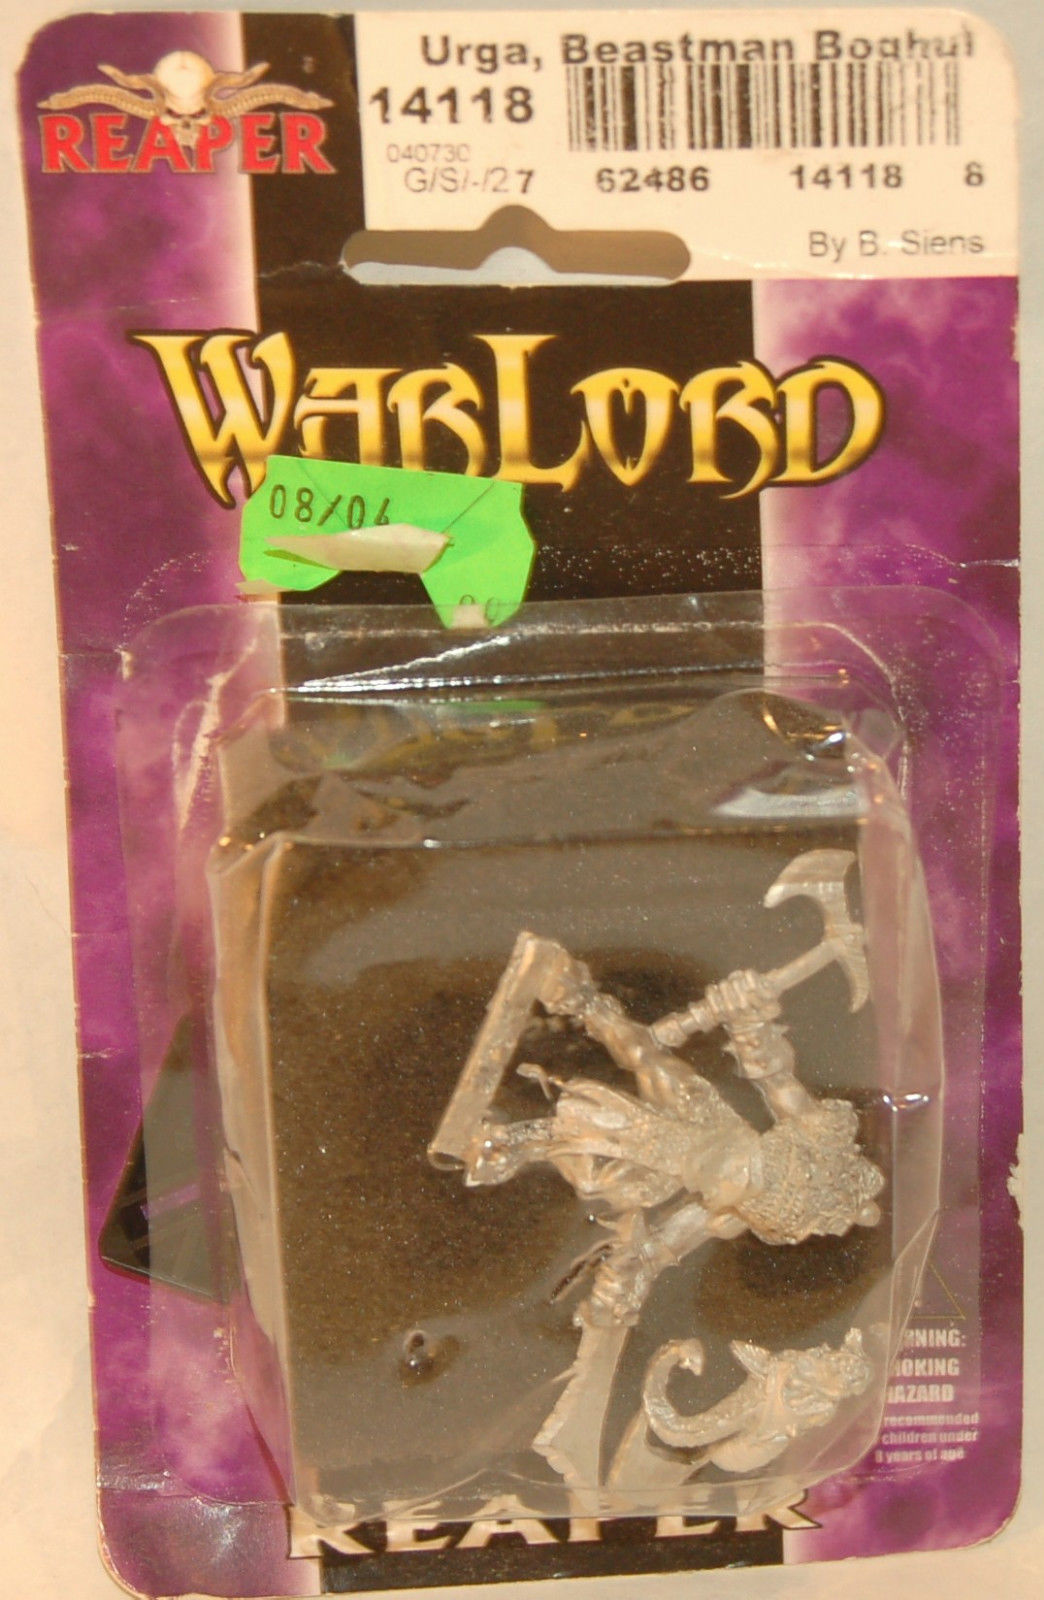 Reaper Warlord Urga Beastman Boghul 2003 Mini Metal Figure Unpainted - $9.90